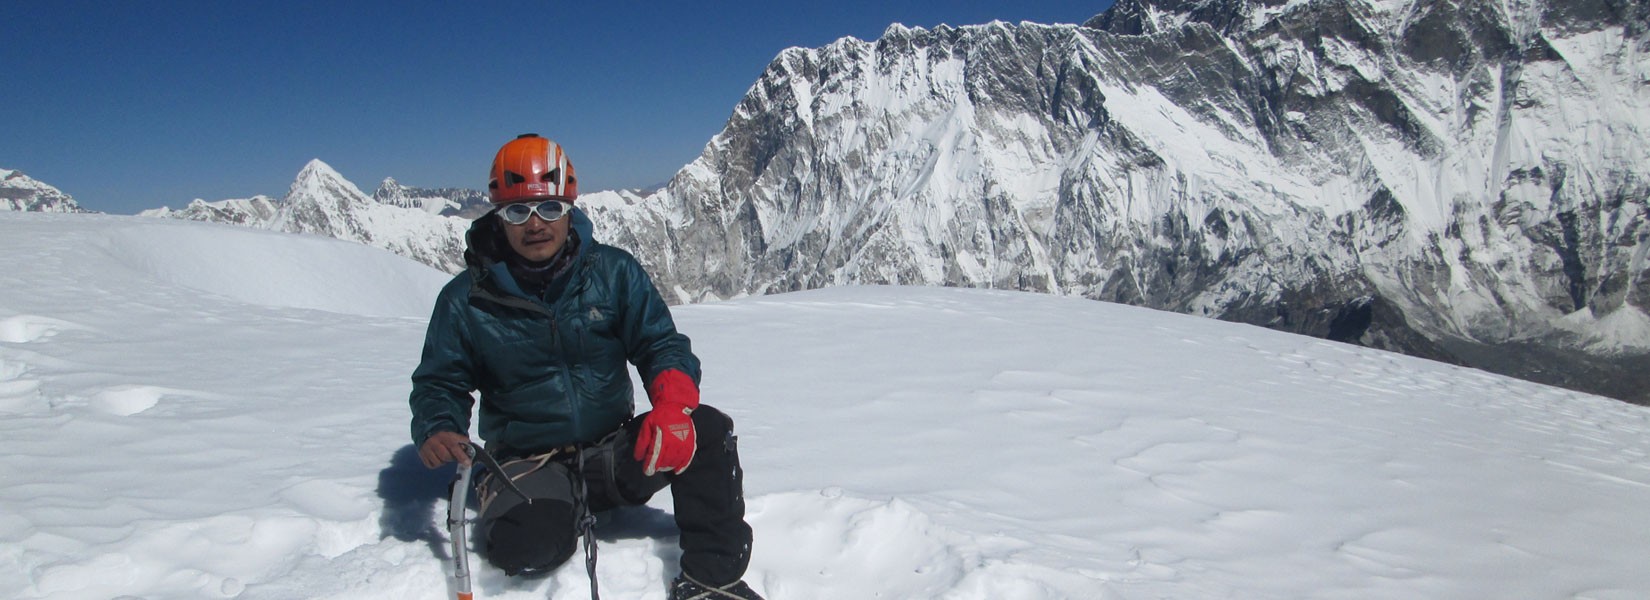 Mt. Ama Dablam Expedition with Everest Basecamp Trek